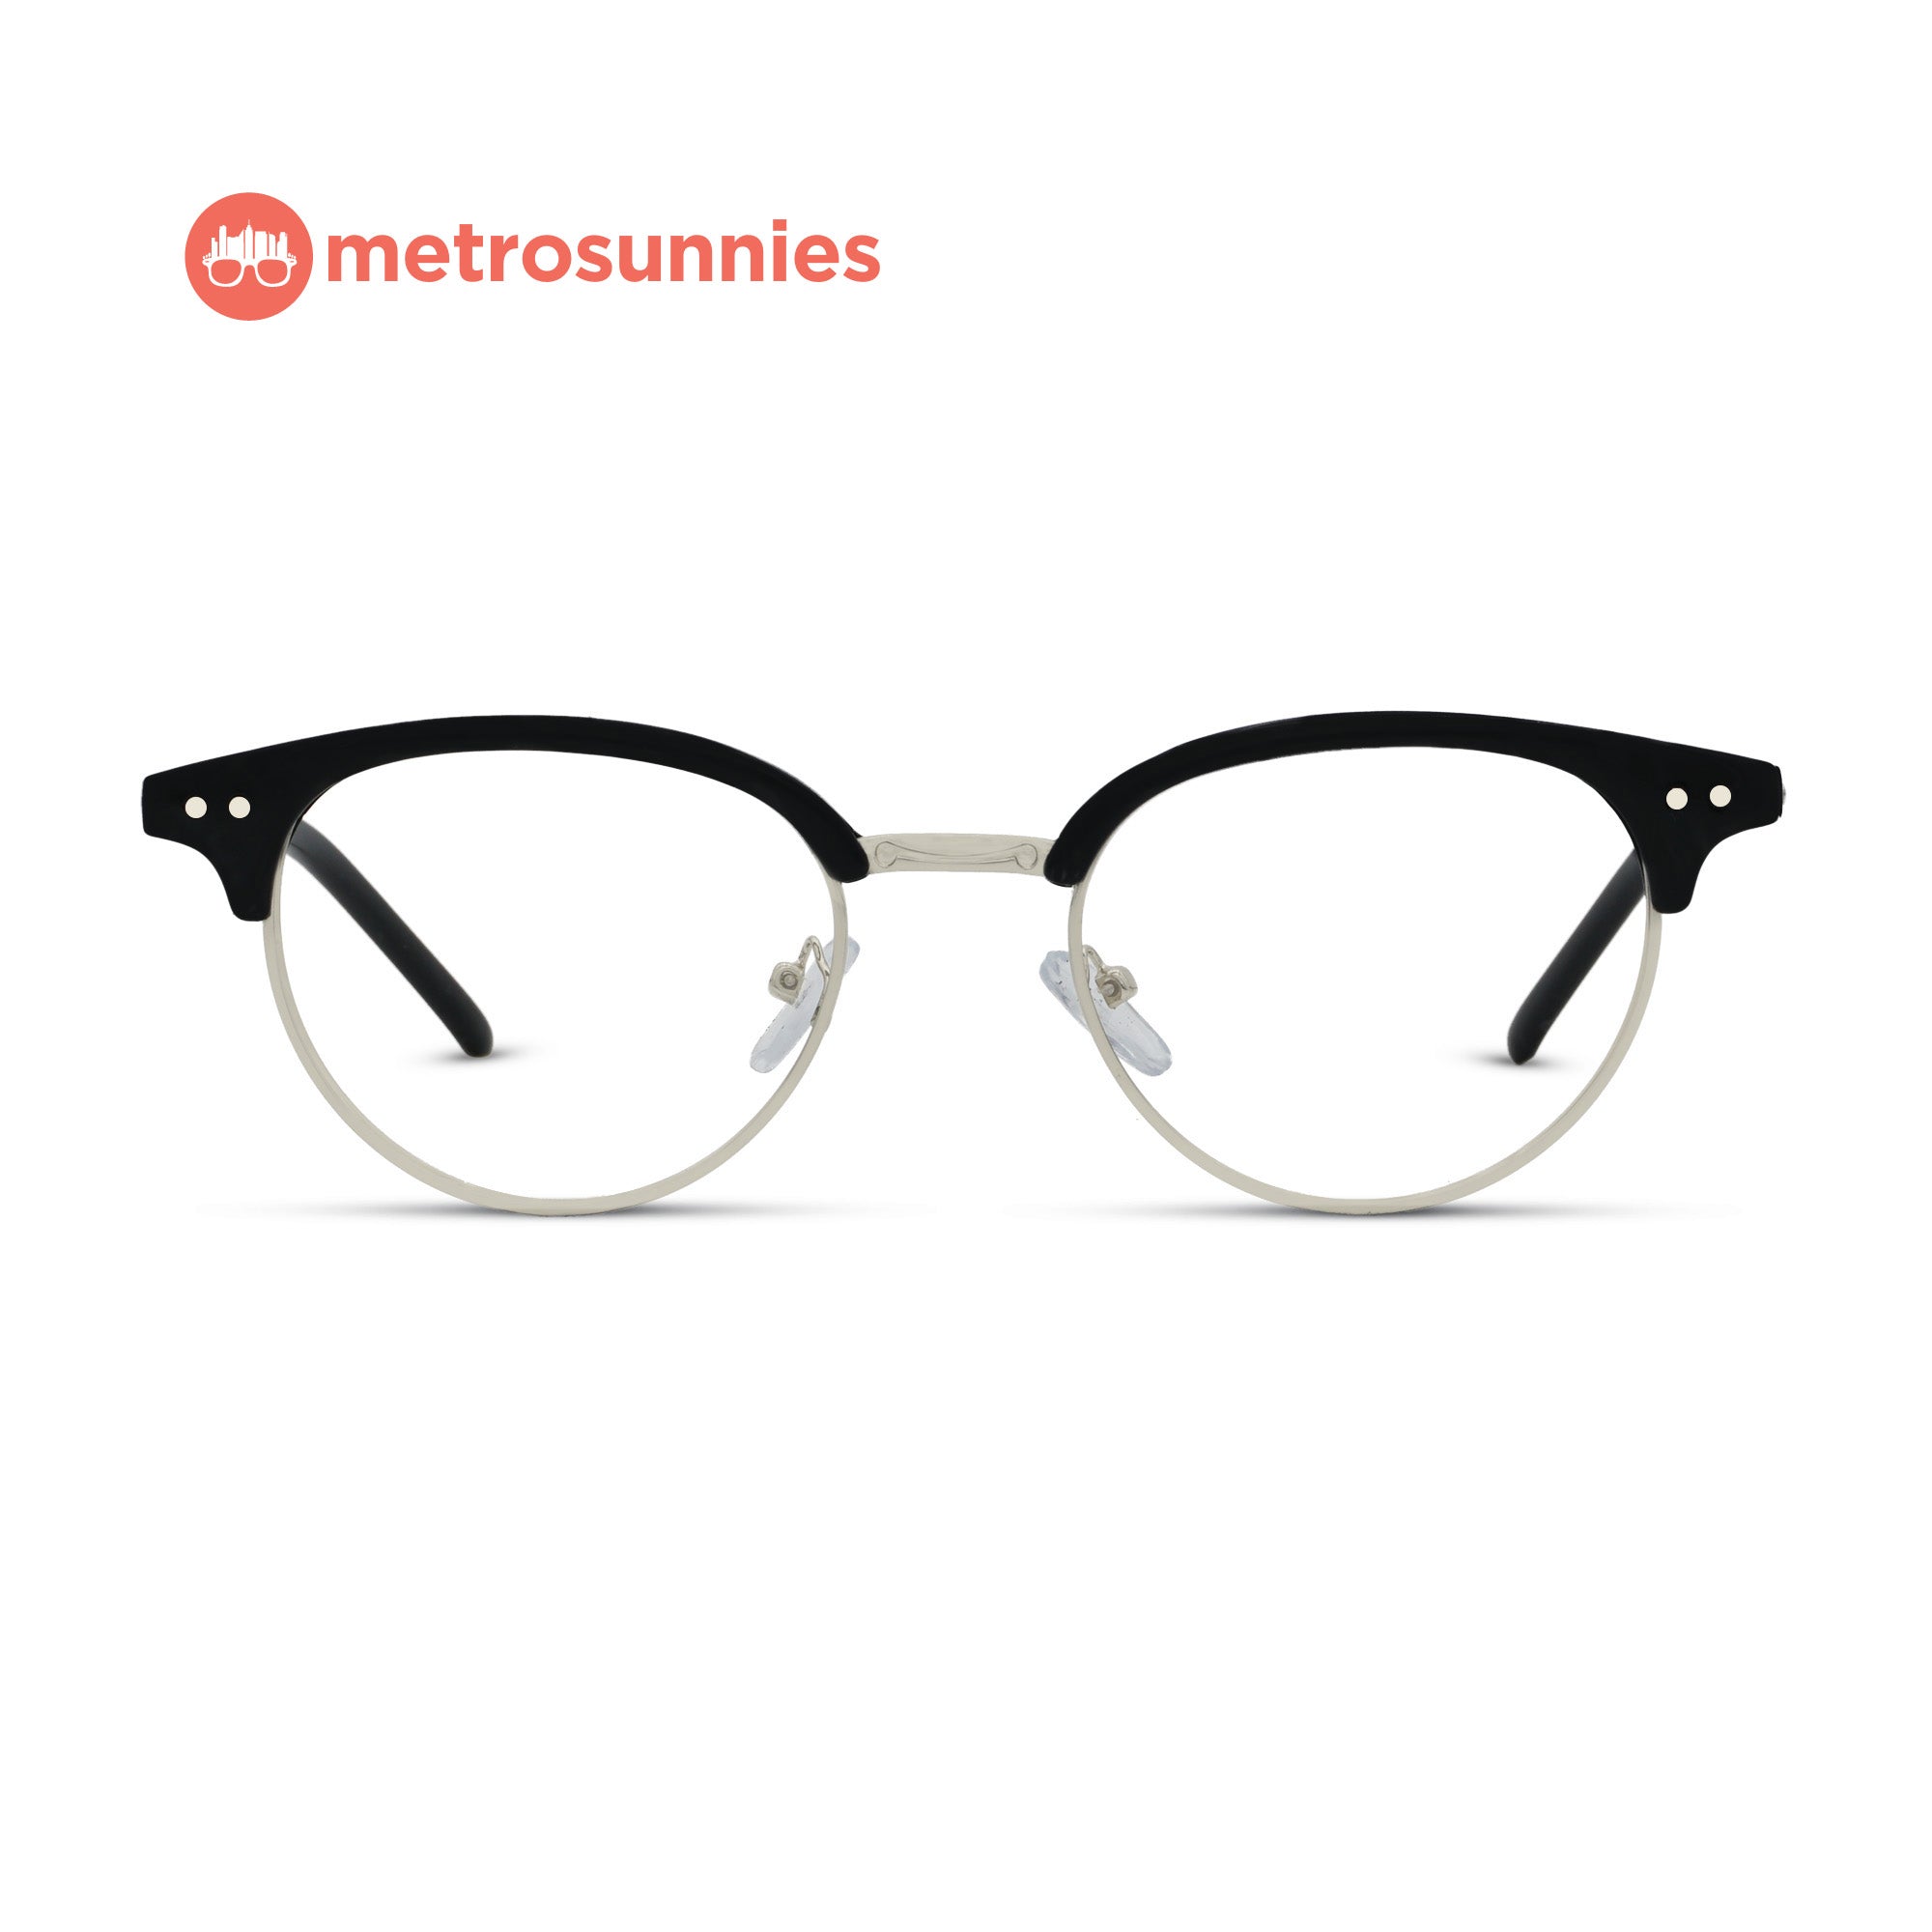 MetroSunnies Greg Specs (Black) / Replaceable Lens / Eyeglasses for Men and Women